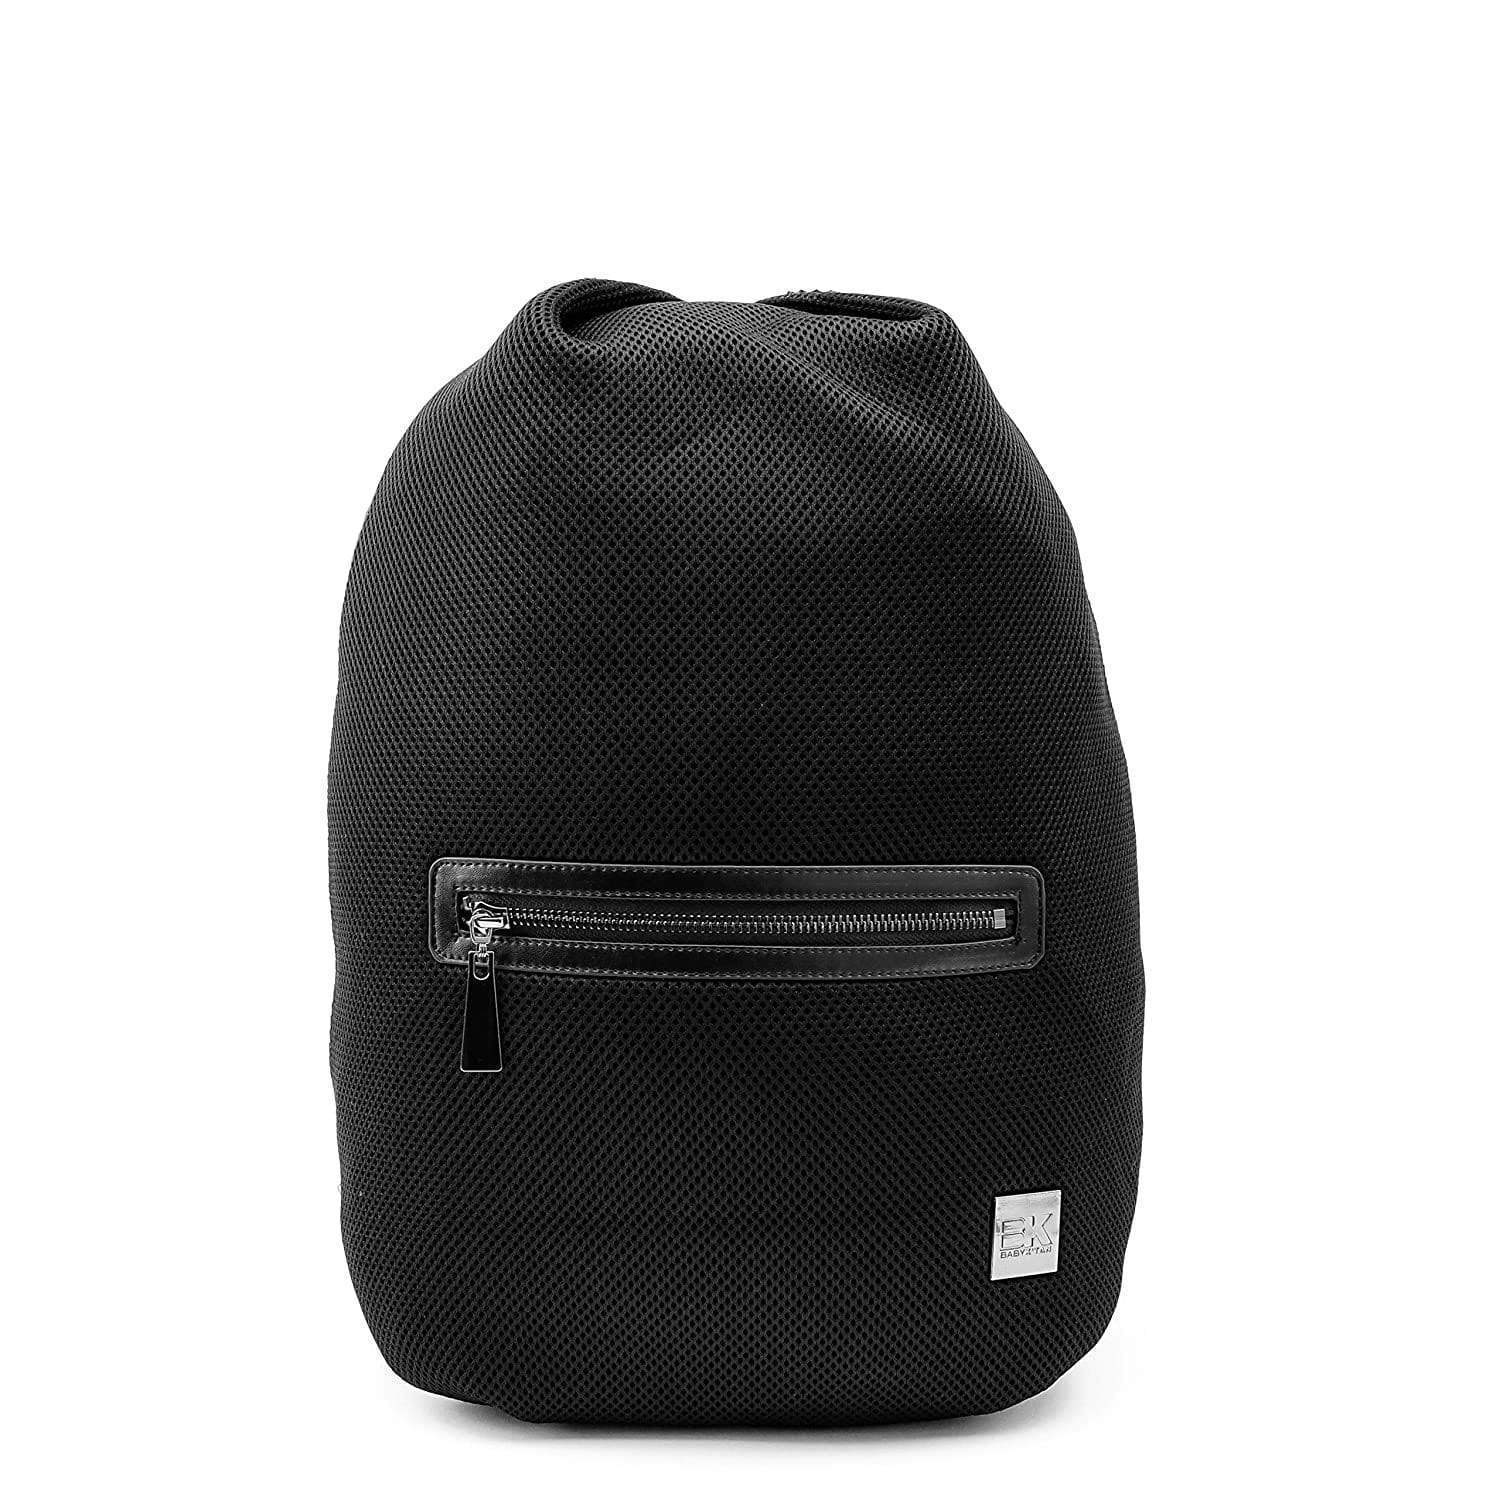 Baby K'tan Sojourn Backpack Diaper Bag in Black Mesh